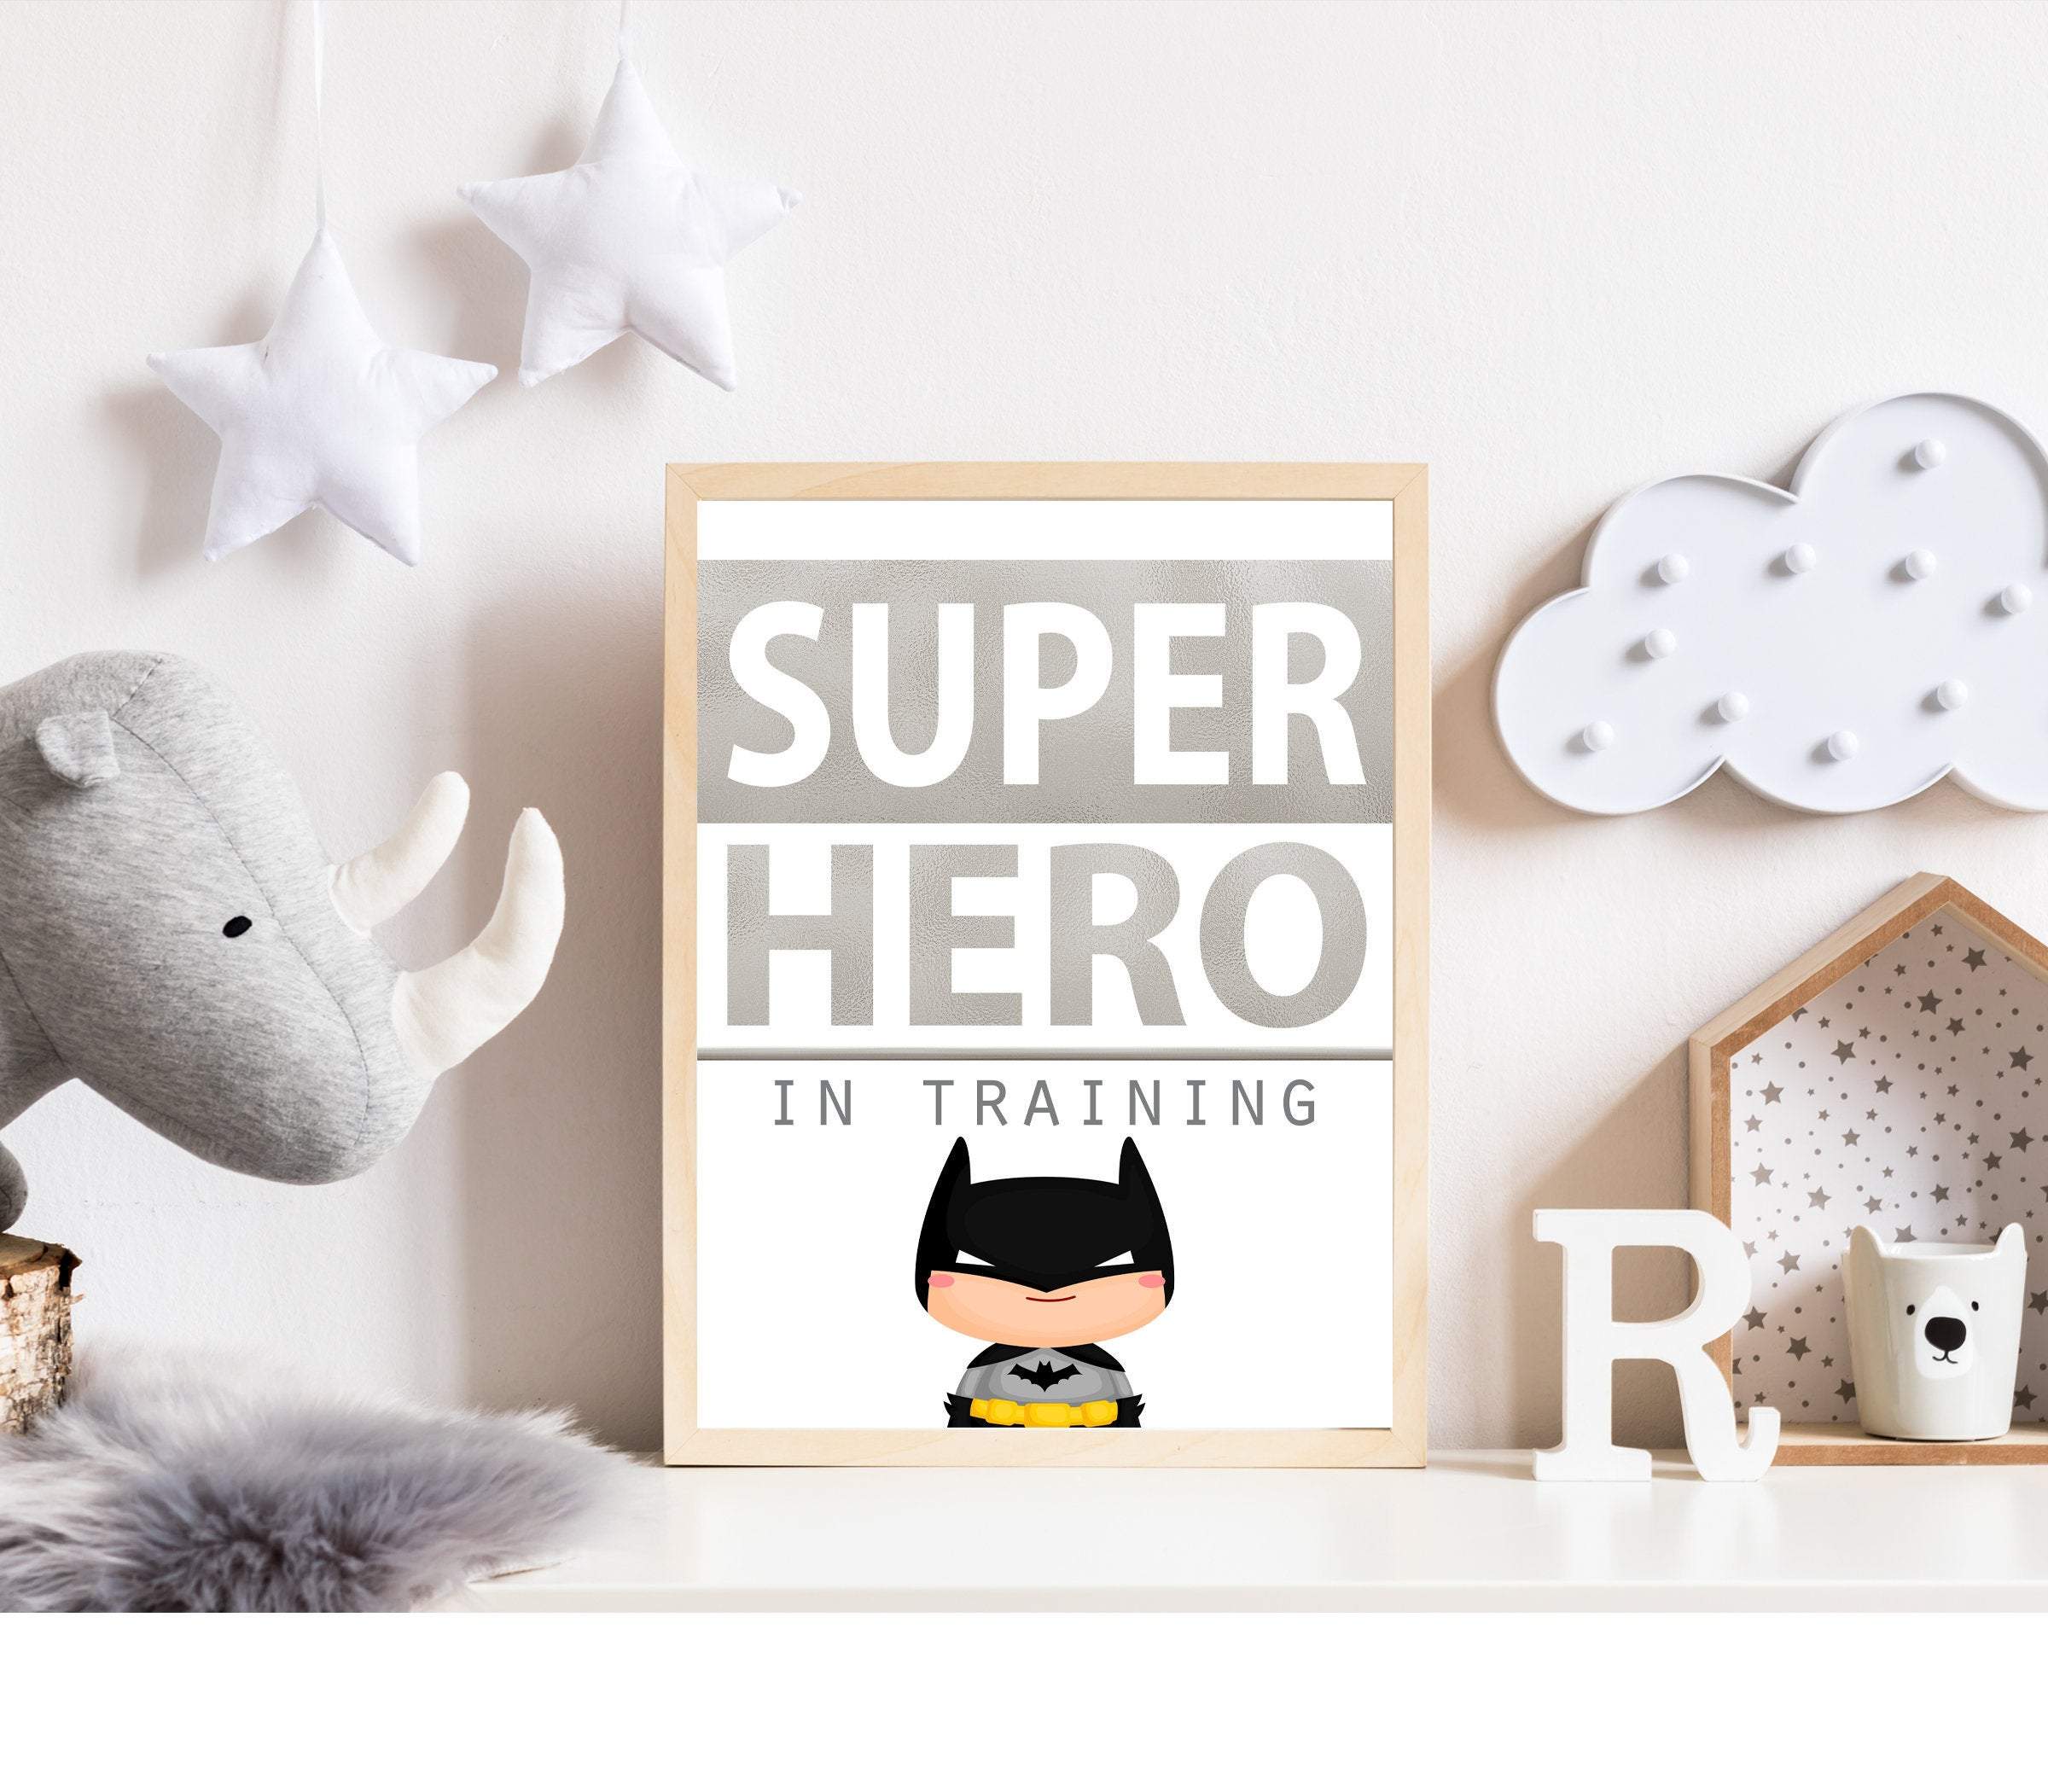 Super hero in training art print | Super hero wall decor nursery art print baby nursery bedroom decor